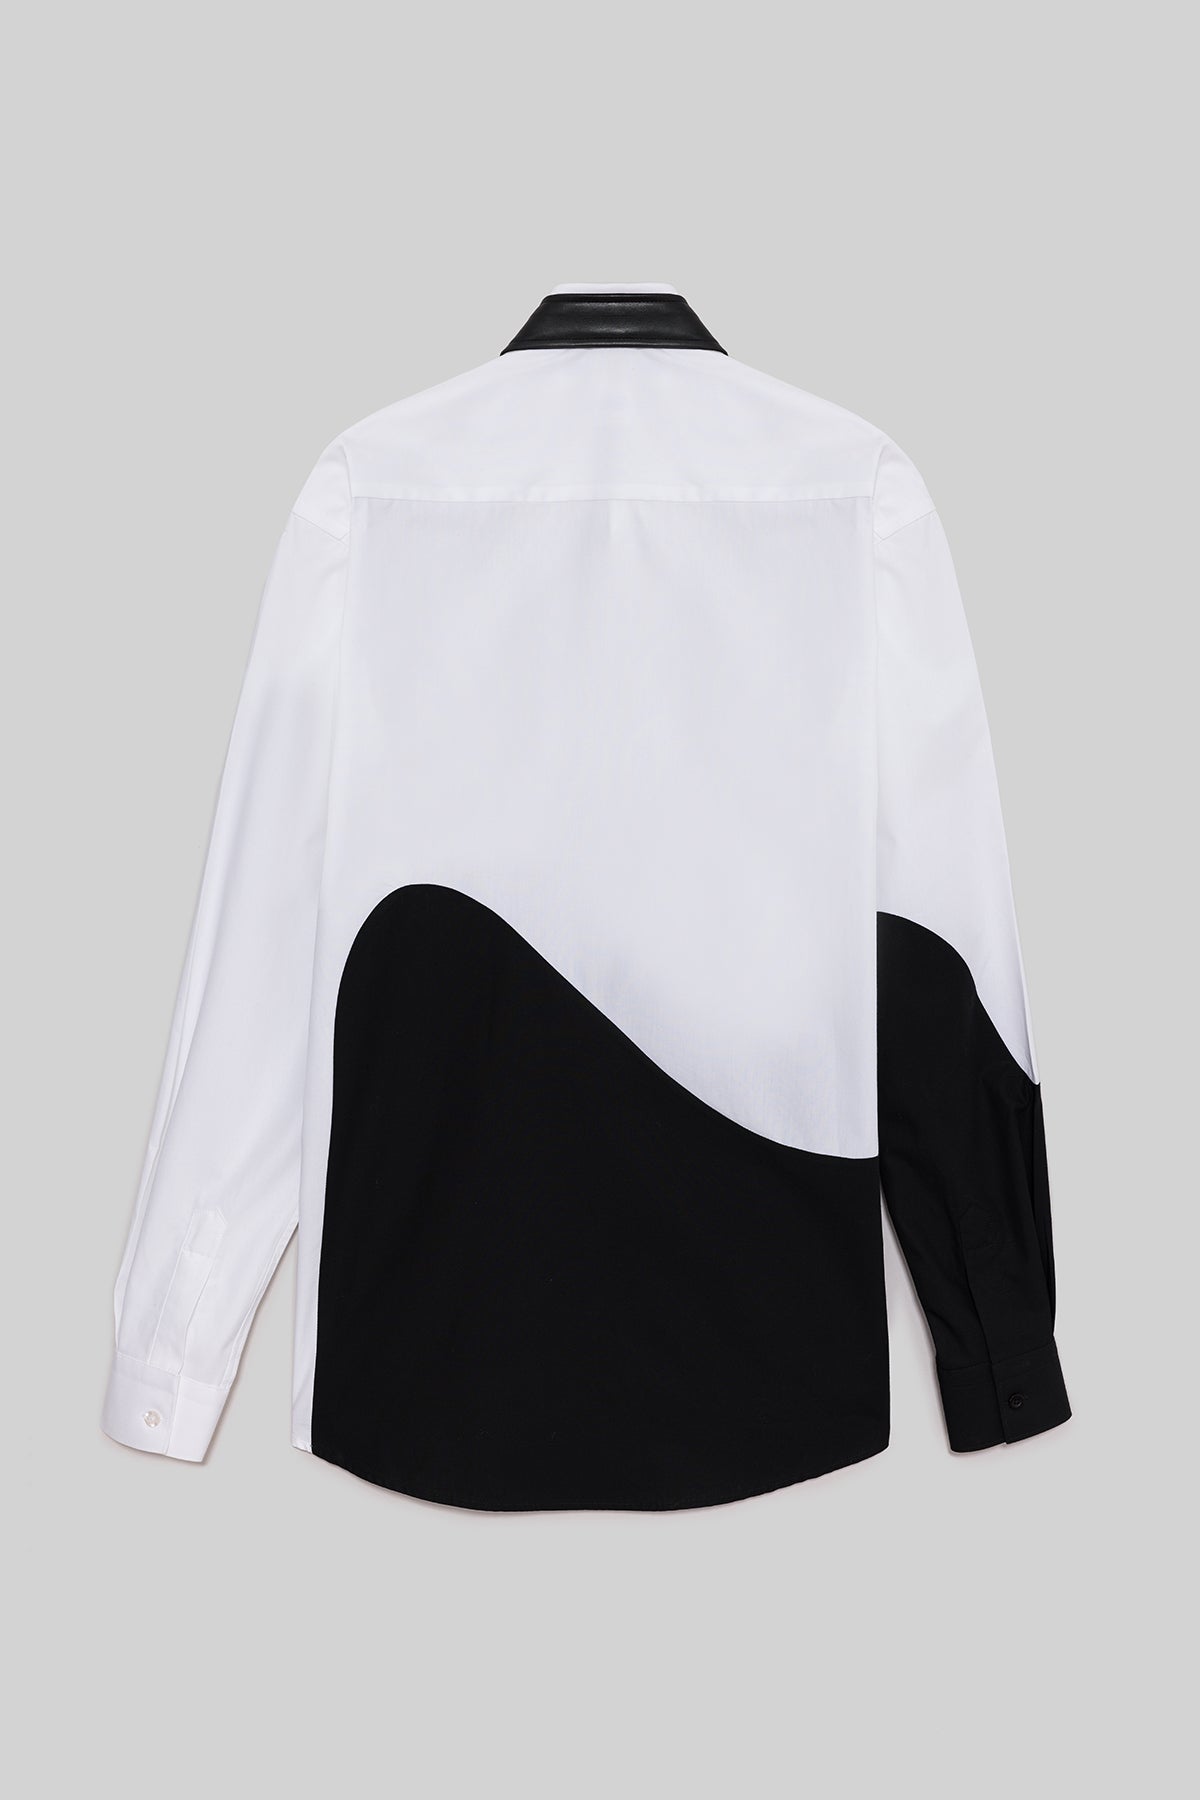 Noir Et Blanc Shirt
